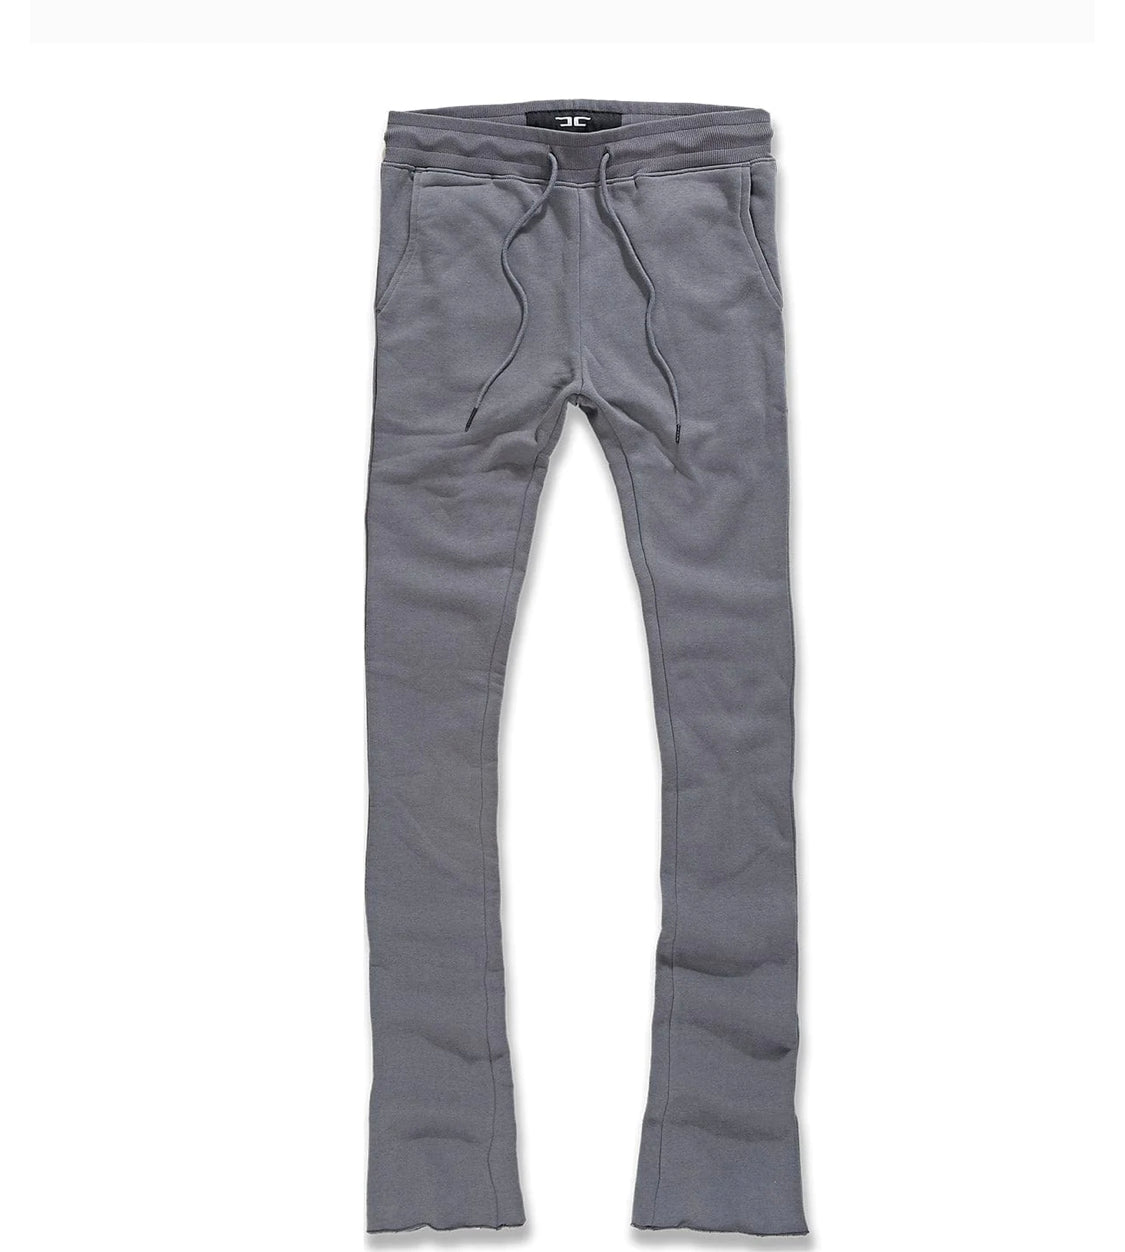 Jordan craig long stack fleece pants Charcoal 8826l